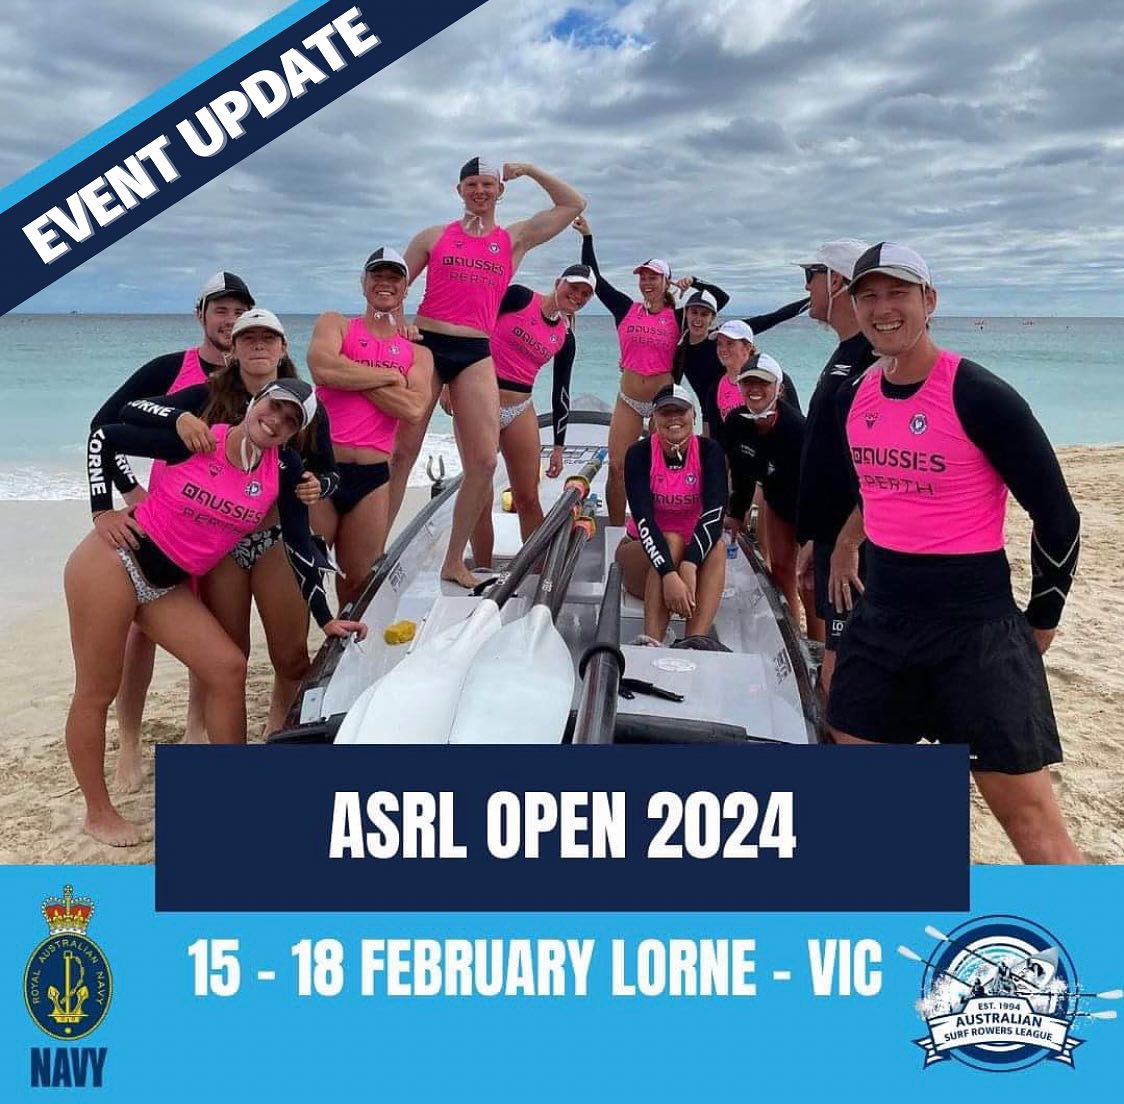 ASRL Open 2024 - Lorne, VIC